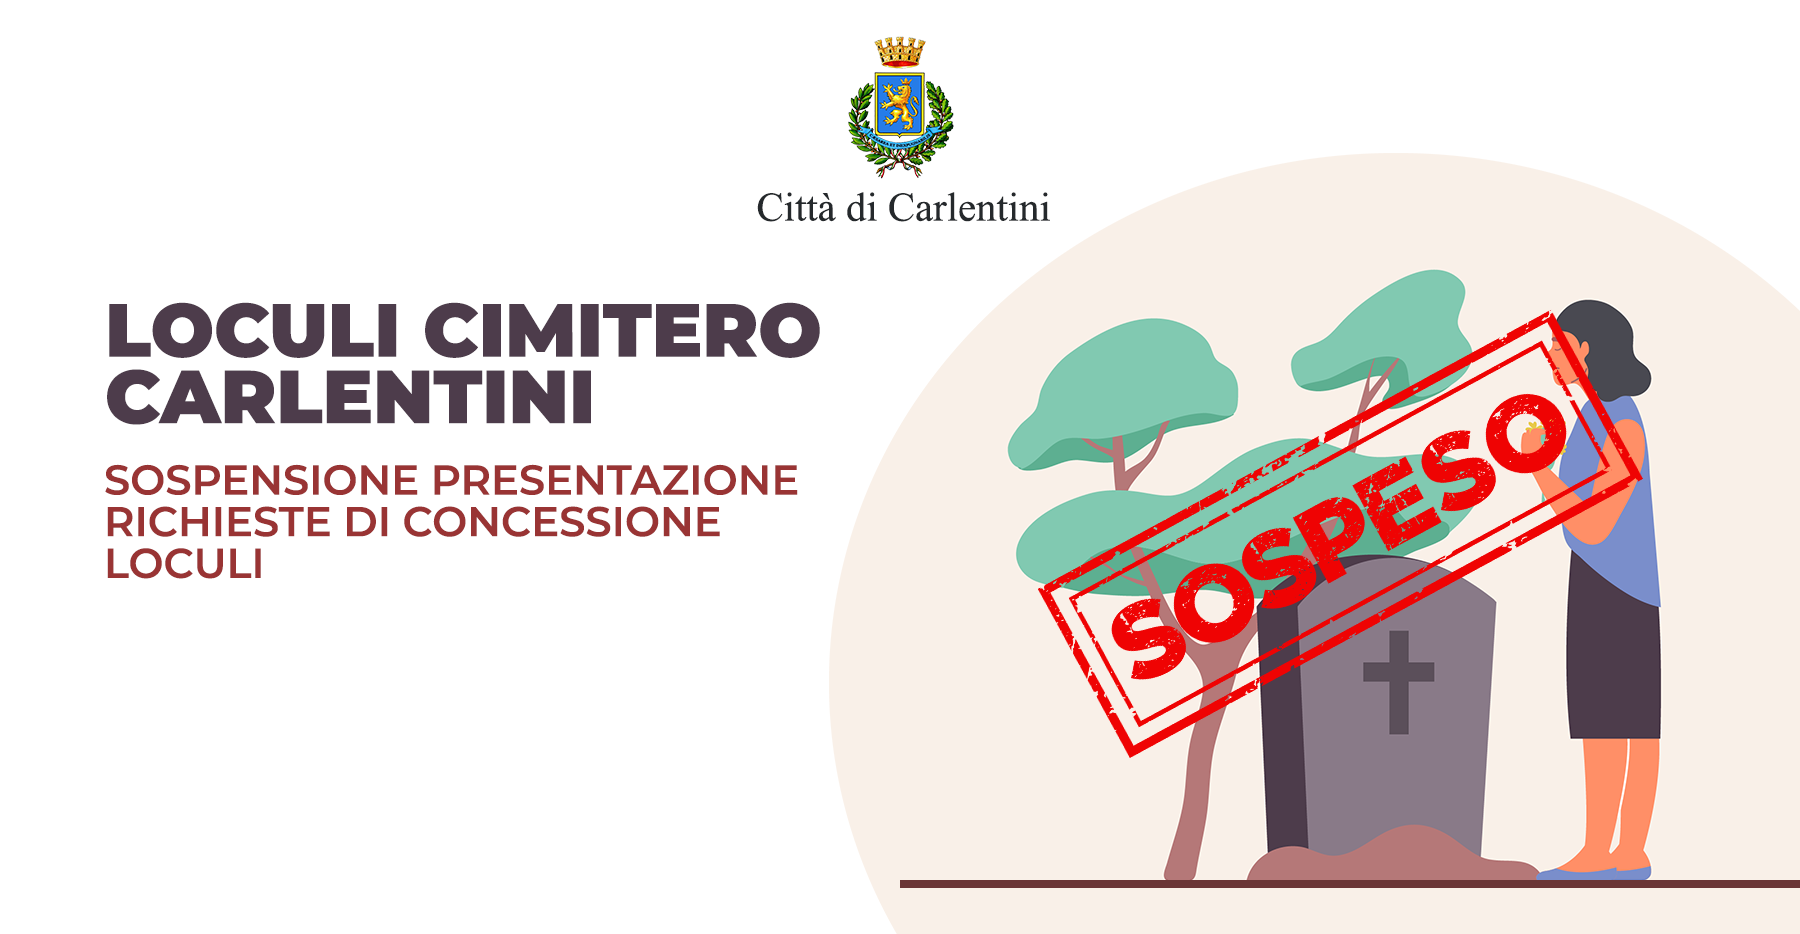 Concessioni loculi cimitero di Carlentini: istanza di concessione sospesa